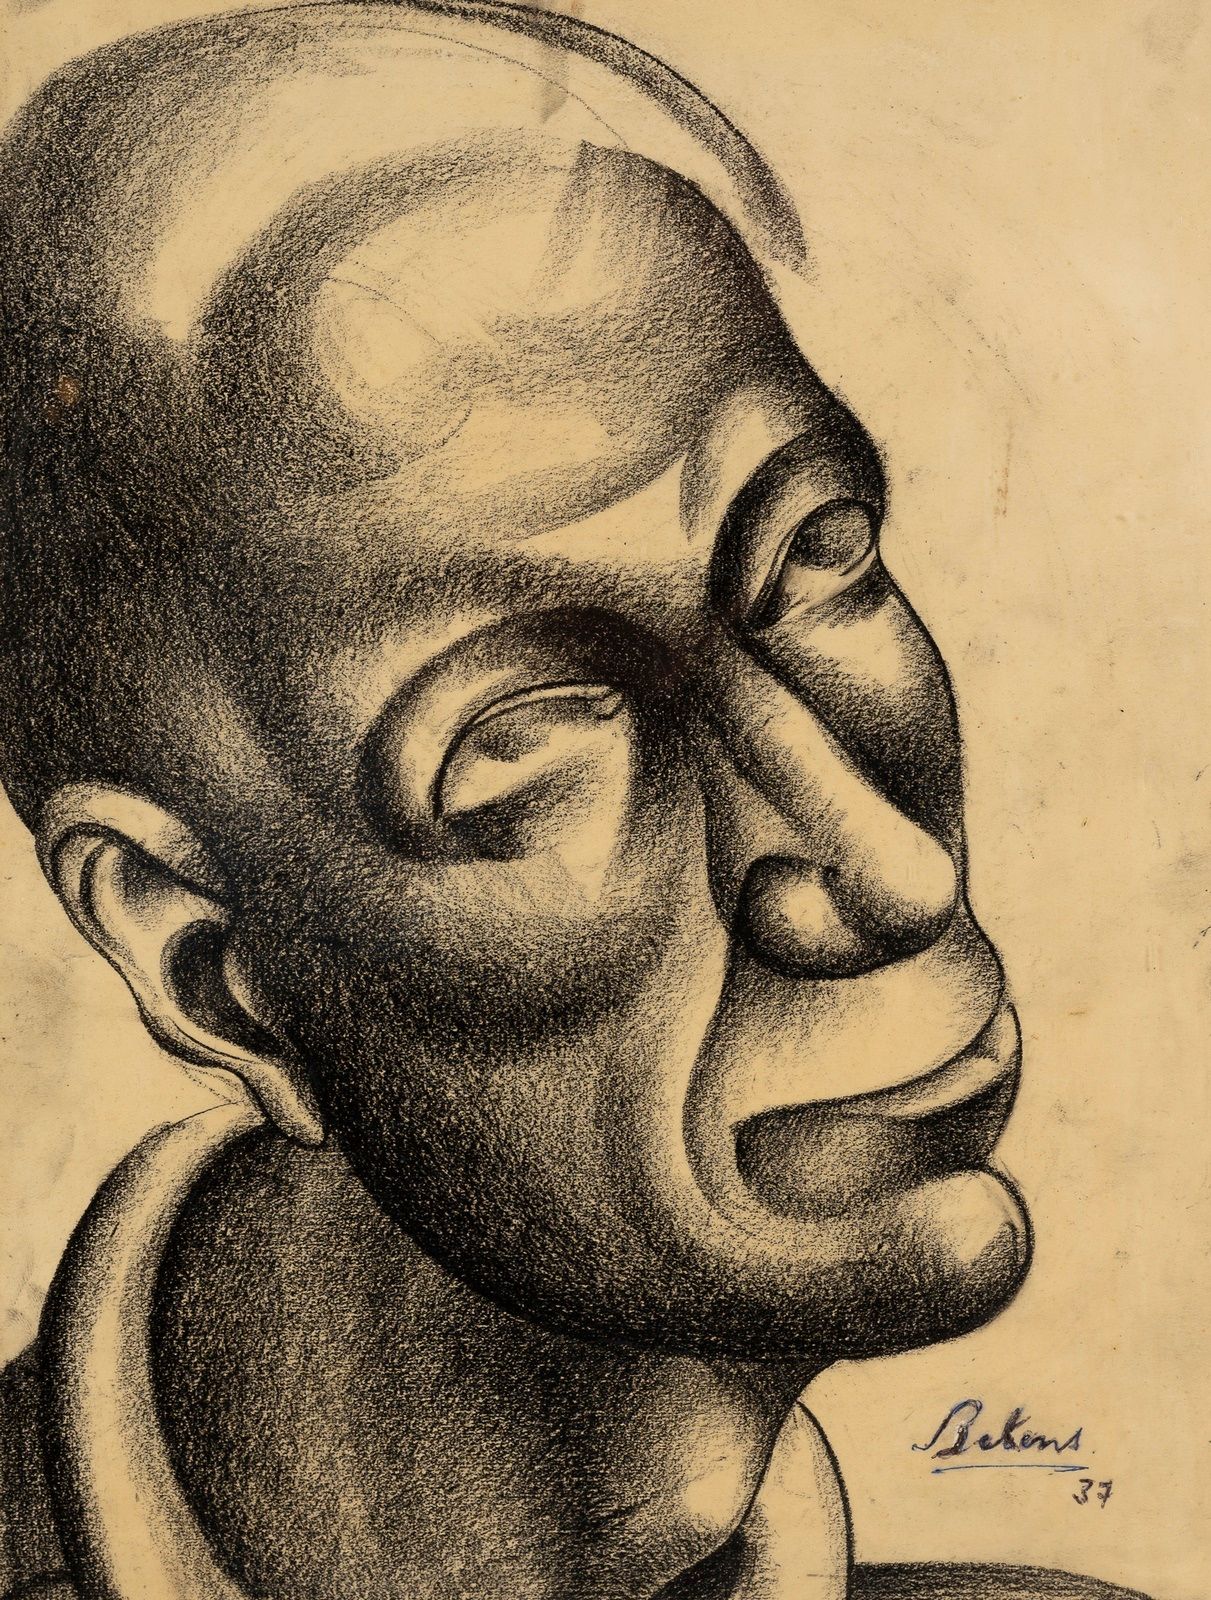 Null Moderne Schule

Porträt eines Mannes ,1937

Kohle 

33x26 cm